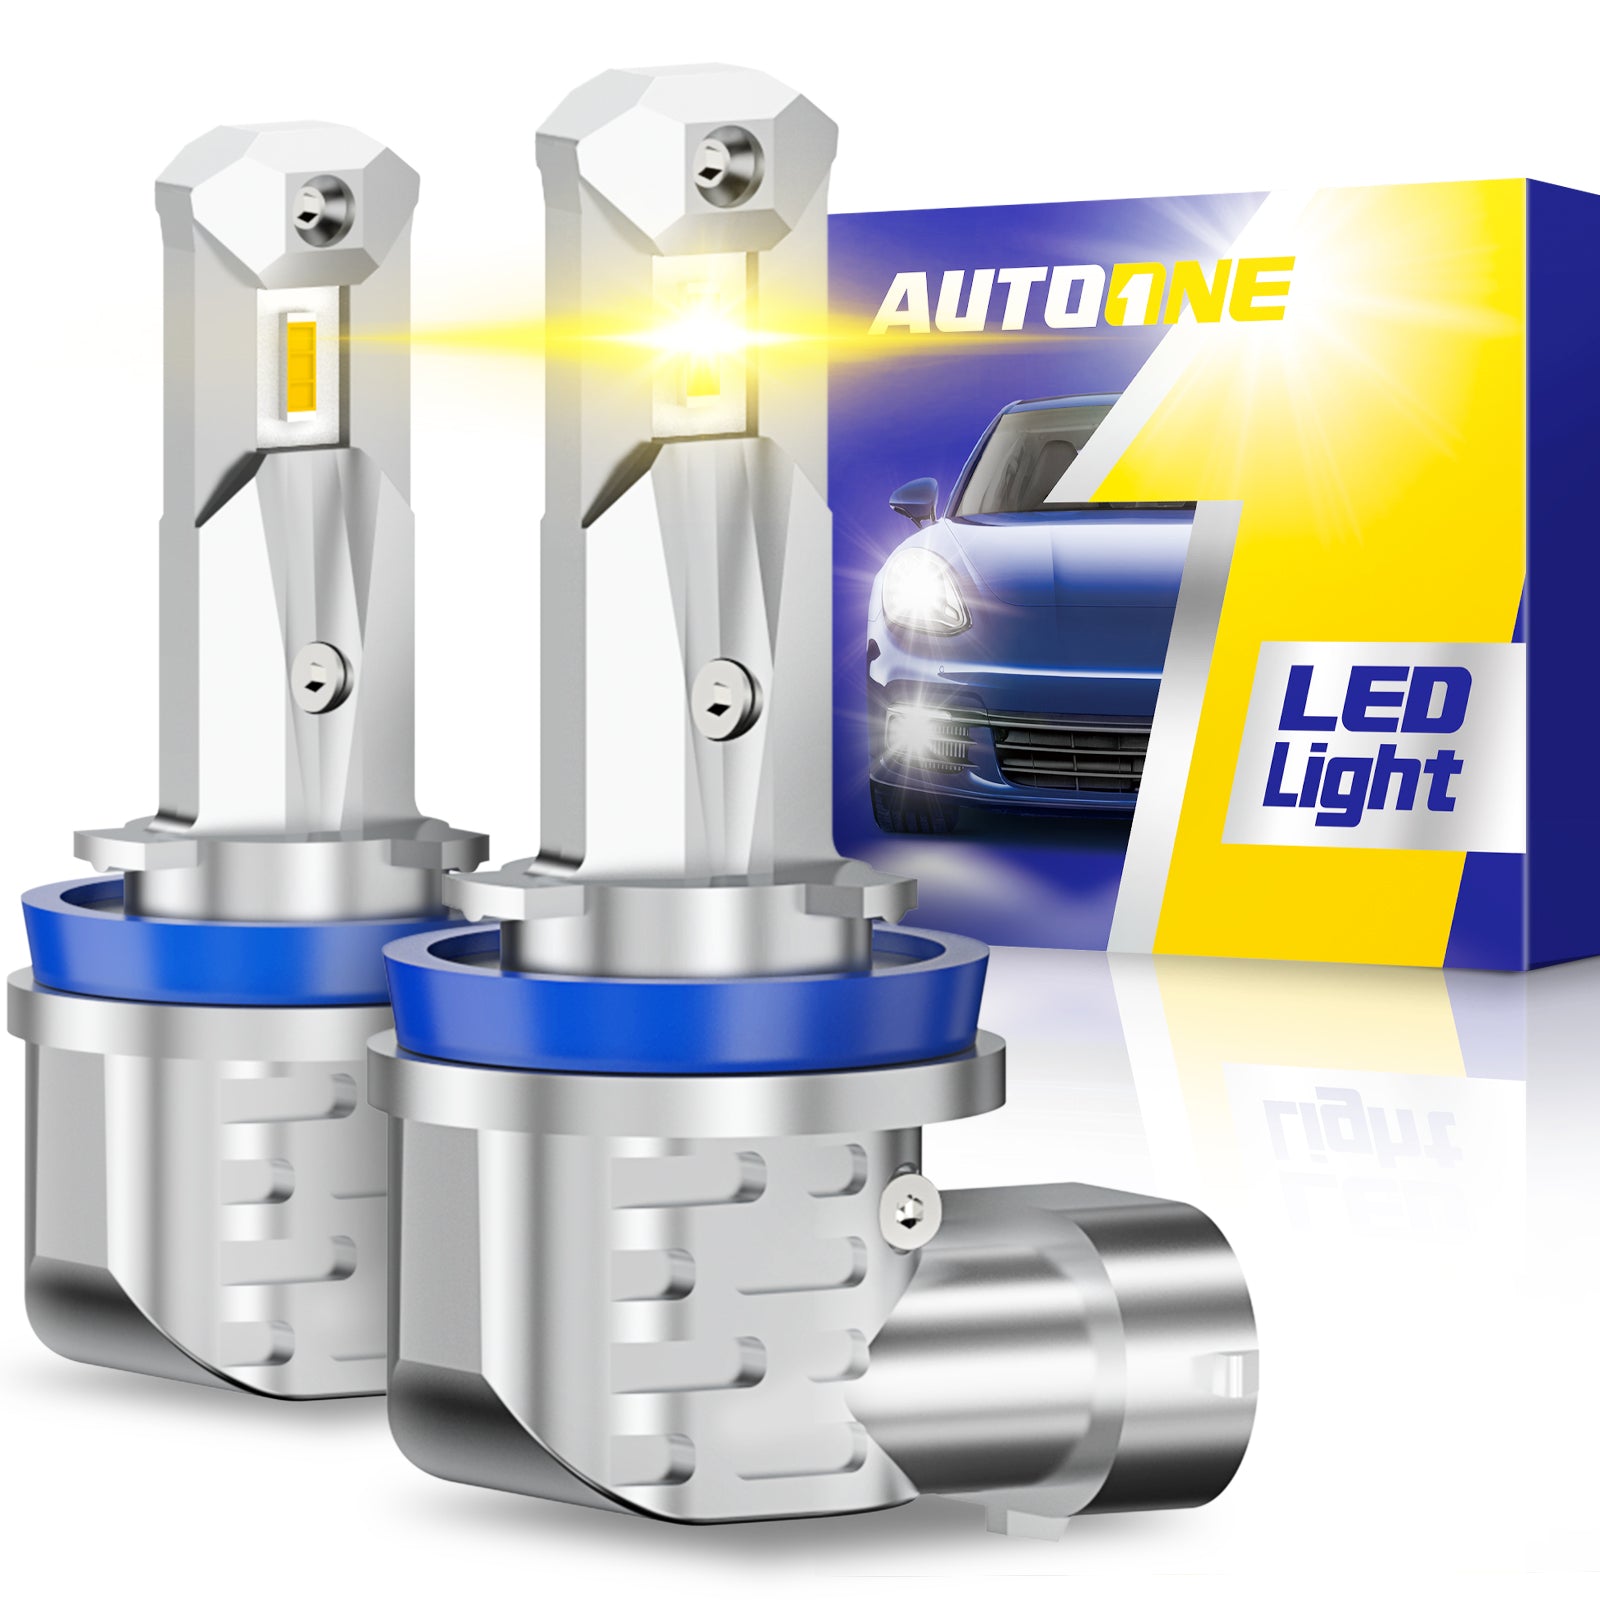 H8 H9 H11 Led Headlight Bulbs Canbus Error Free, 12v 70w 12000lumens 6000k  Xenon White H11 Led Auto Car Headlight Conversion Kit, 360 Degree Adjustabl